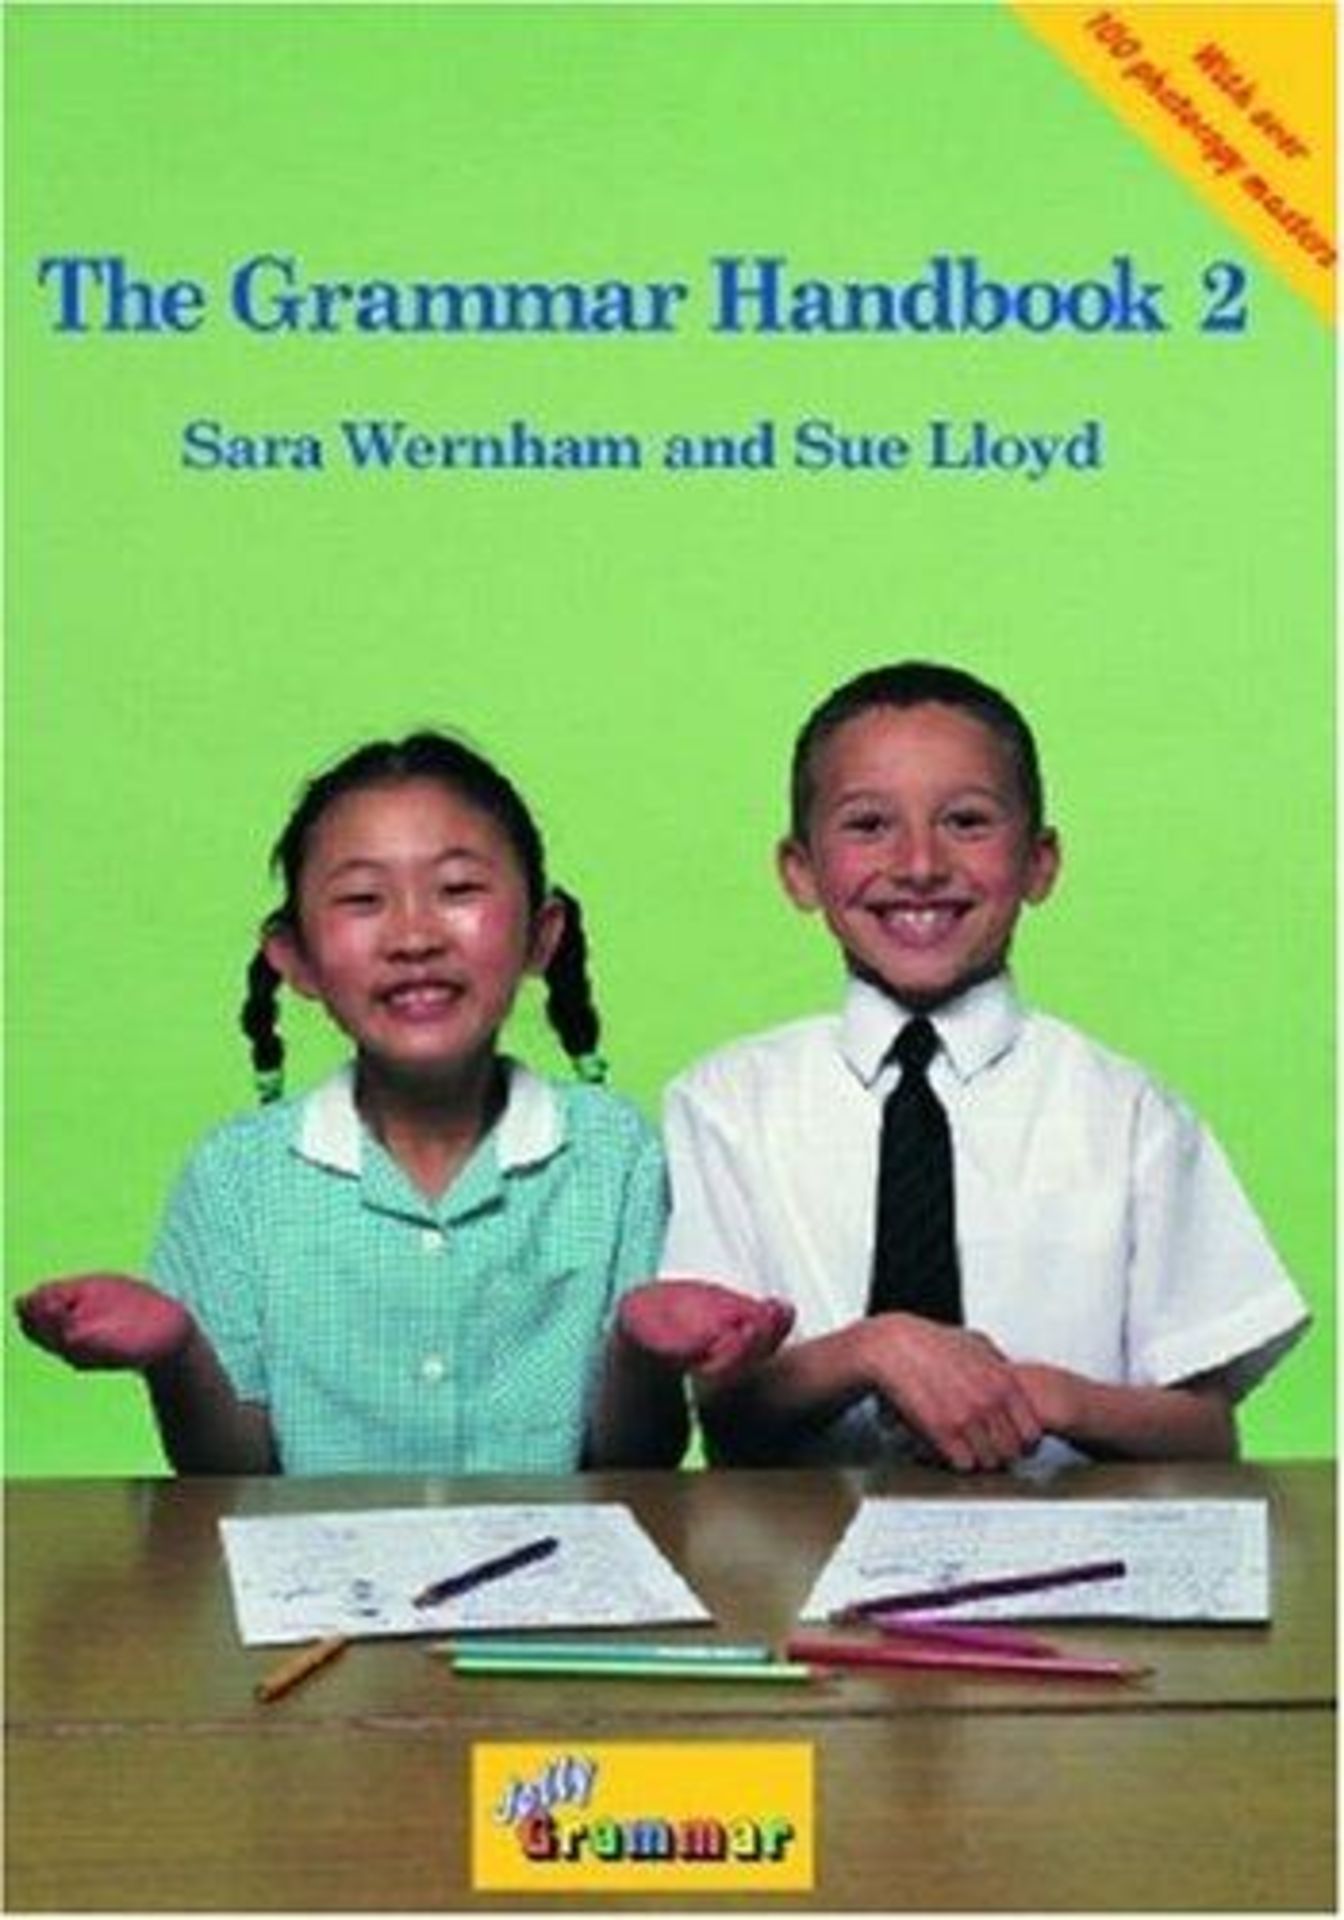 V Brand New The Grammar 2 Handbook For Teaching Spelling, Grammar & Punctuation ISP£16.03 (cqout.